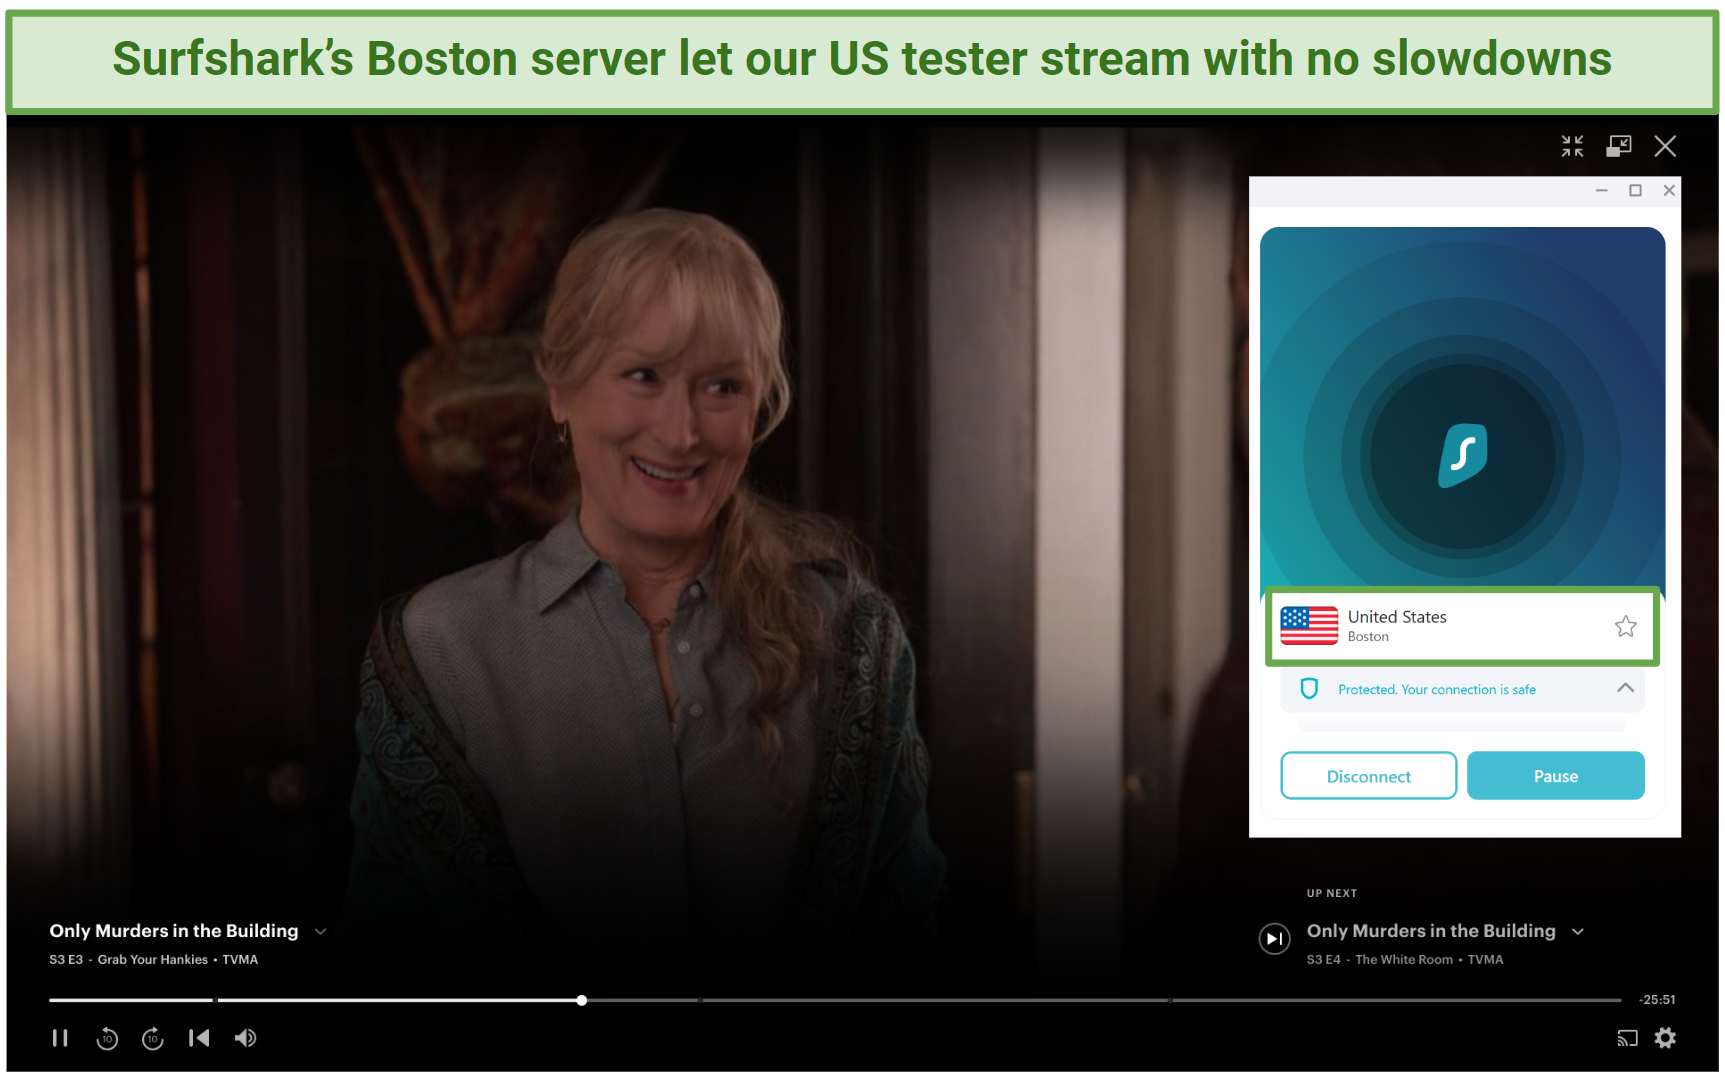 Surfshark streaming Hulu on Boston server